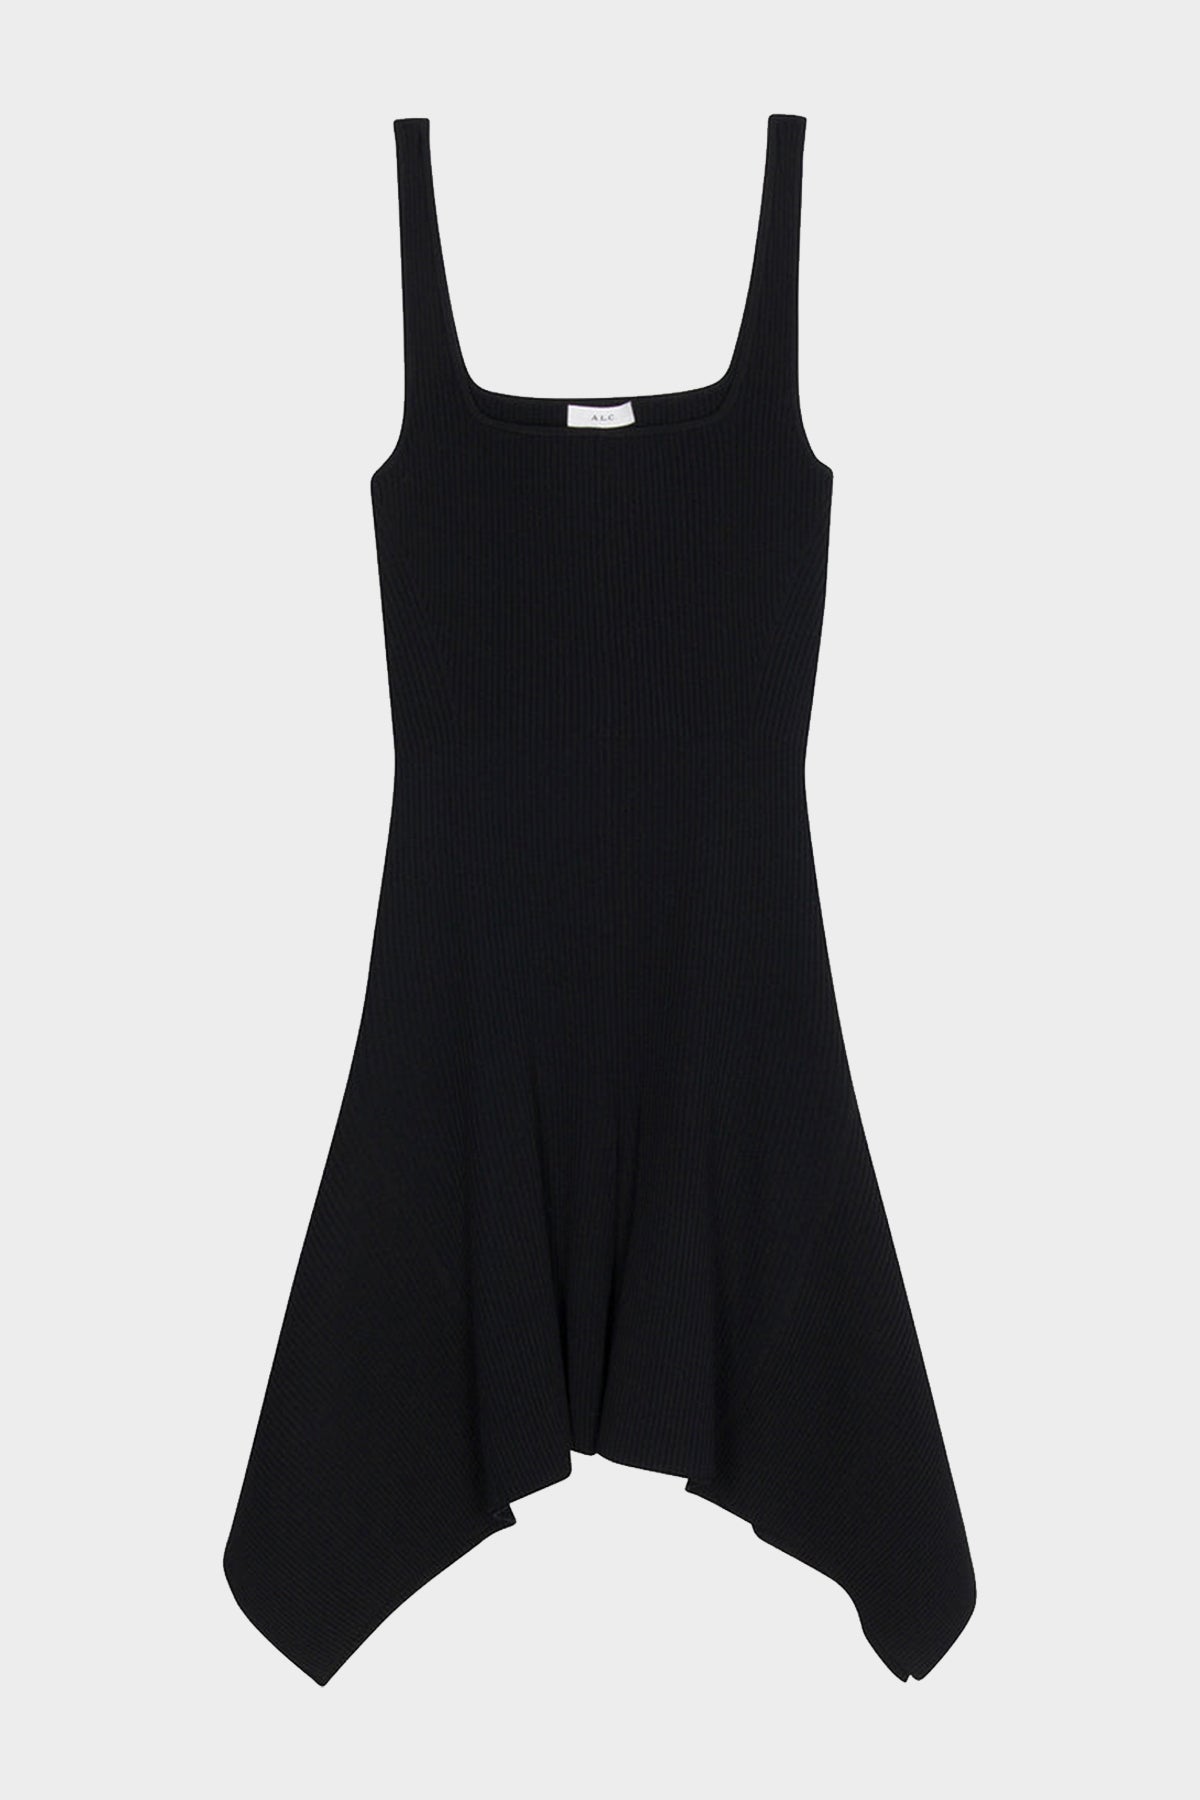 Dalia Dress in Black - shop-olivia.com